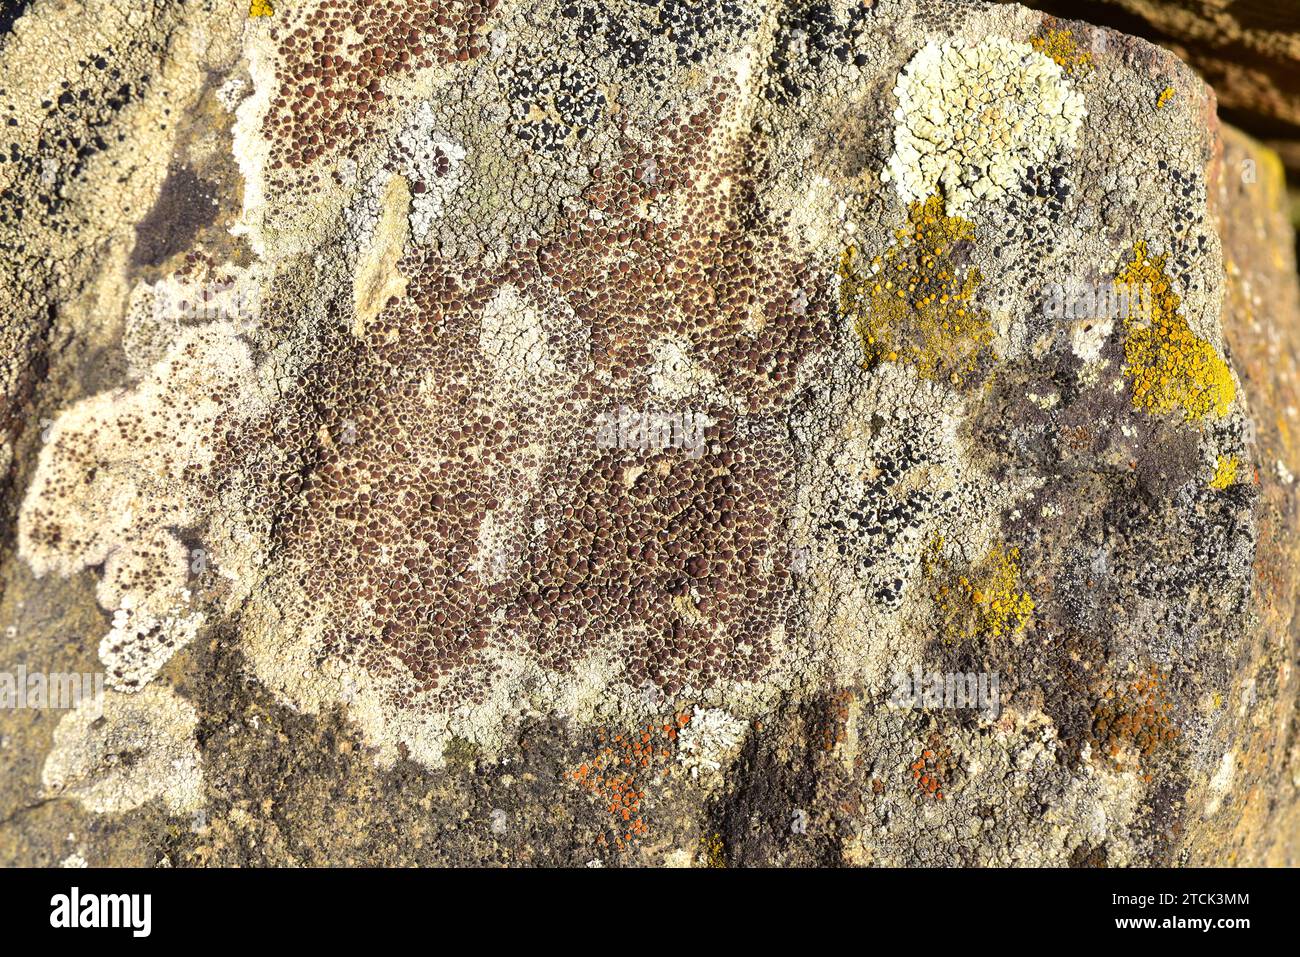 Lecanora campestris is a crustose lichen with brown apothecia. This photo was taken in La Albera, Girona province, Catalonia, Spain. Stock Photo